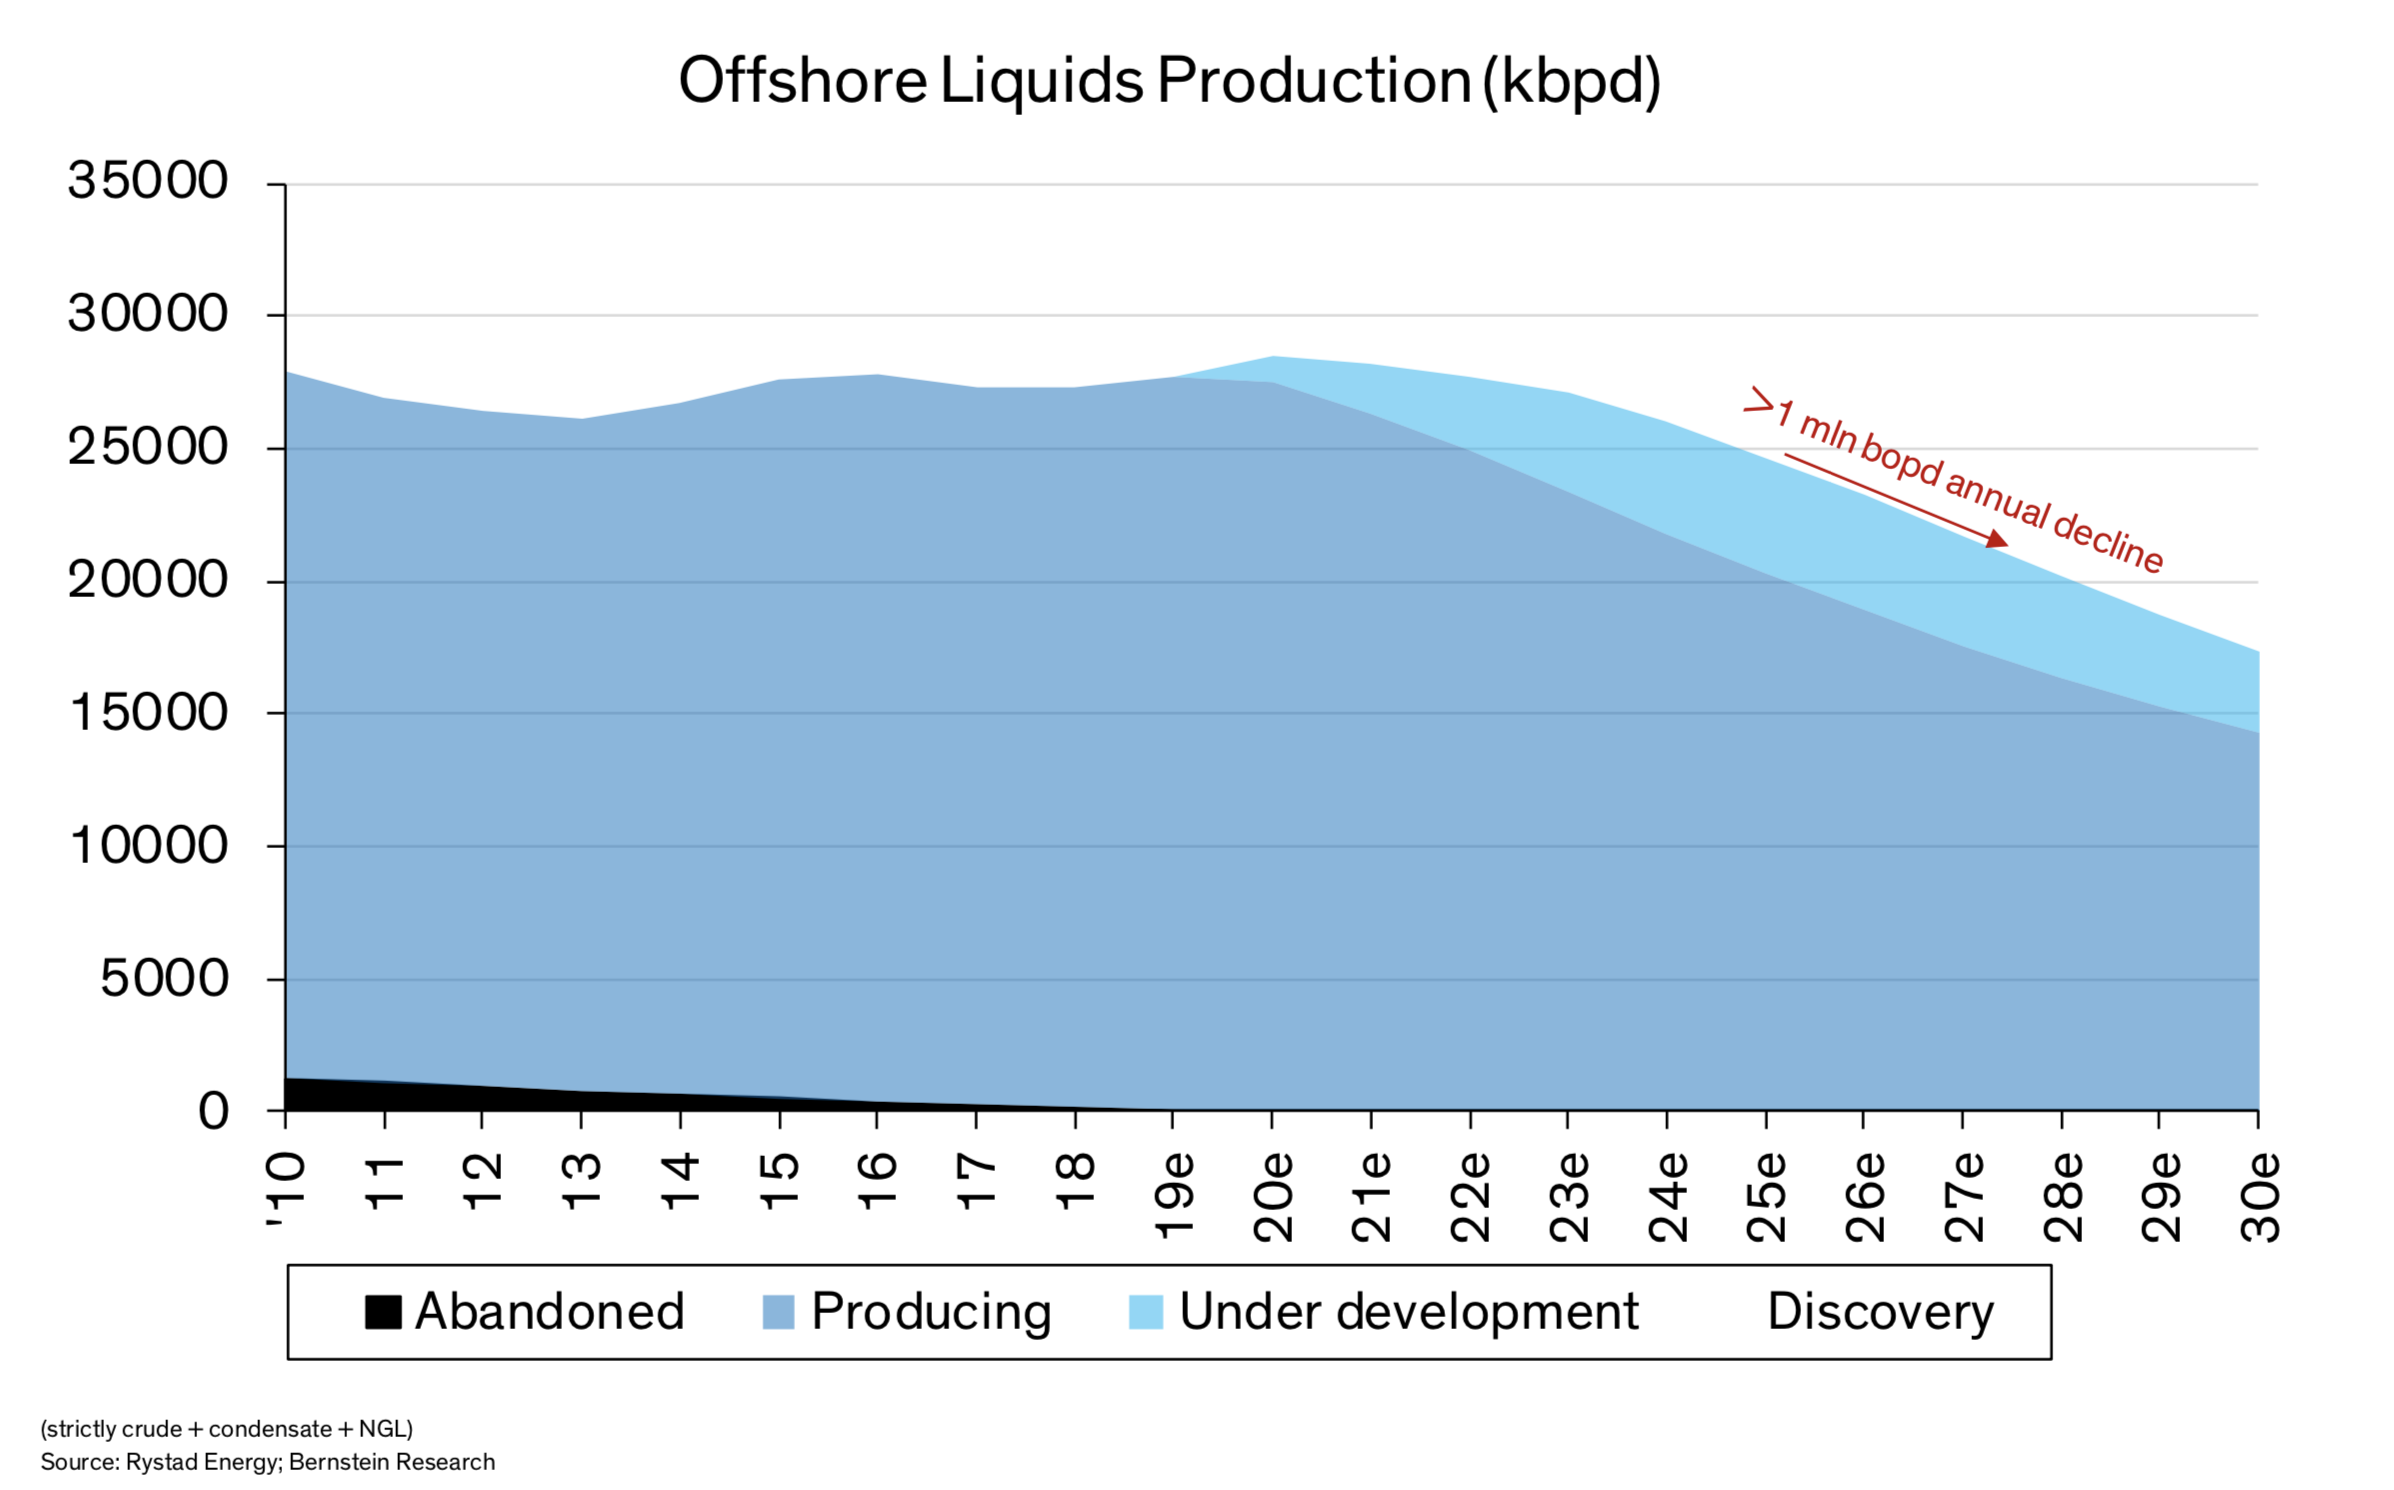 Offshore Liquids Production Exhibit 1 (Source: Bernstein Research)